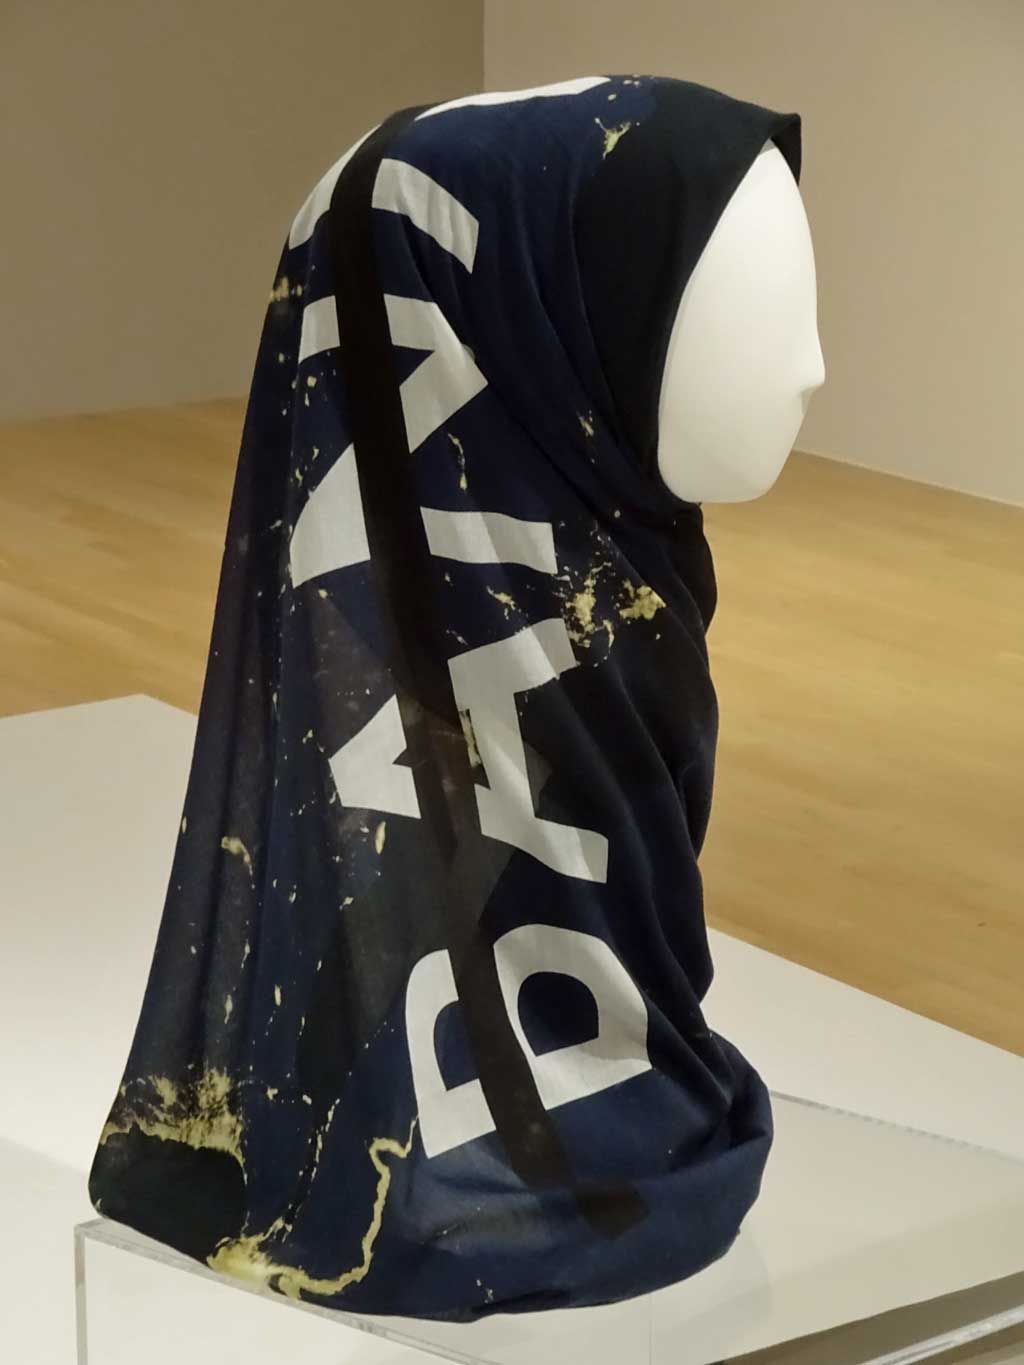 Contemporary Muslim Fashions im Museum Angewandte Kunst in Frankfurt